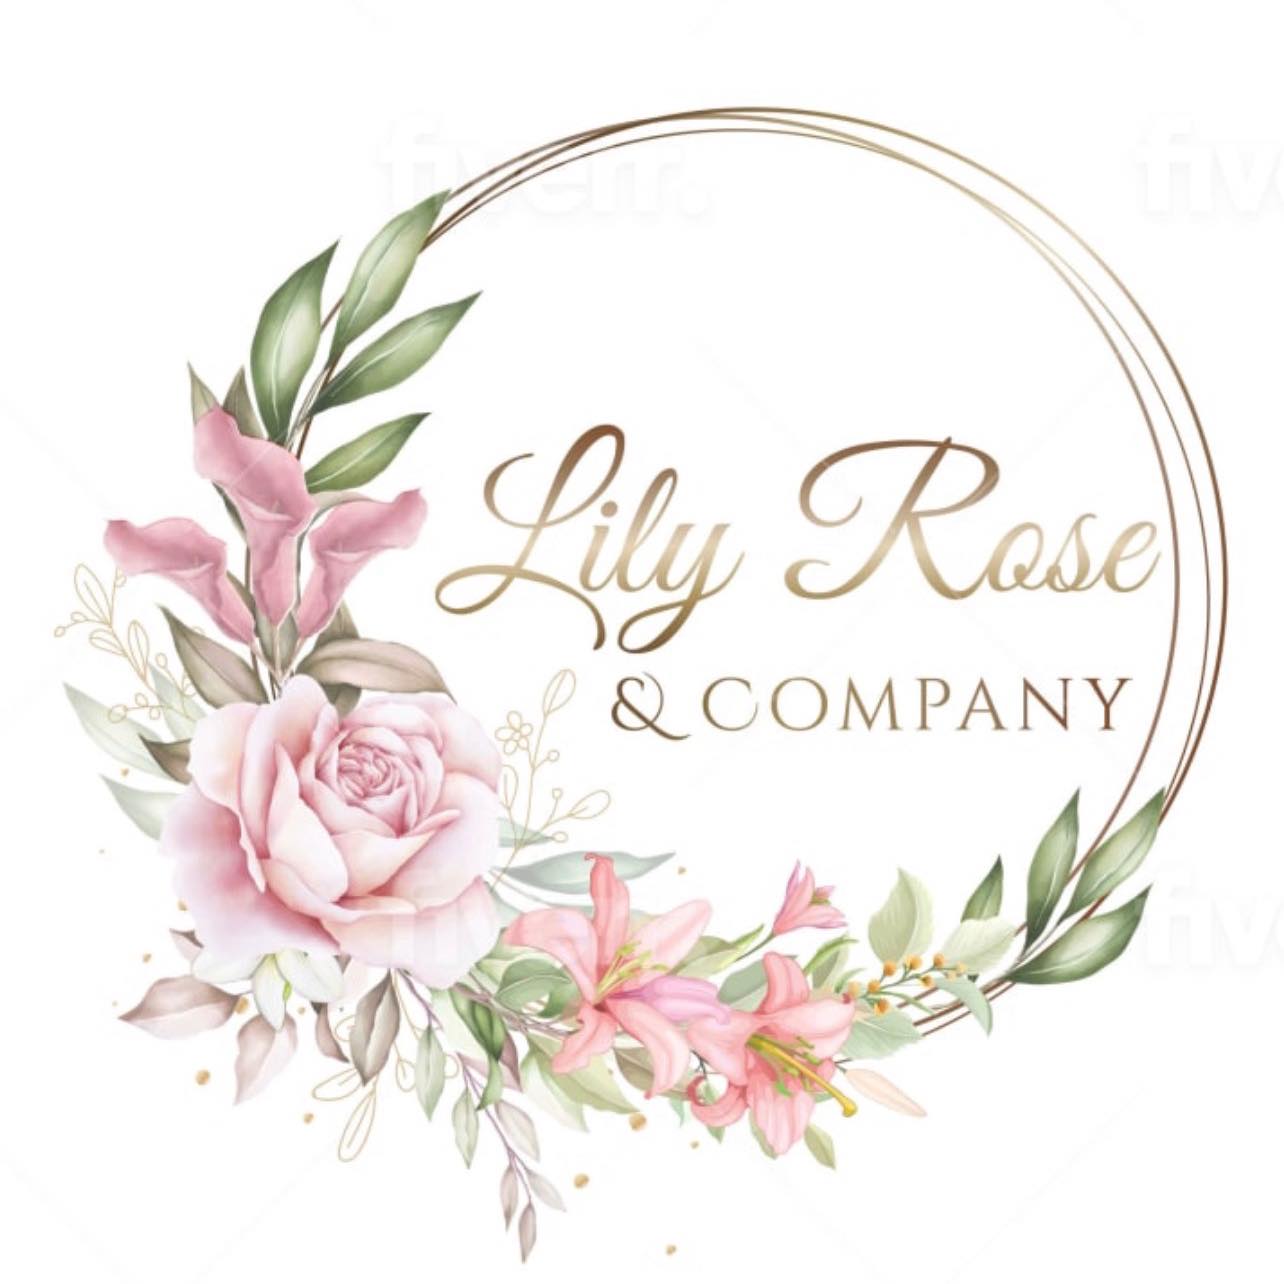 Lily Rose & Company